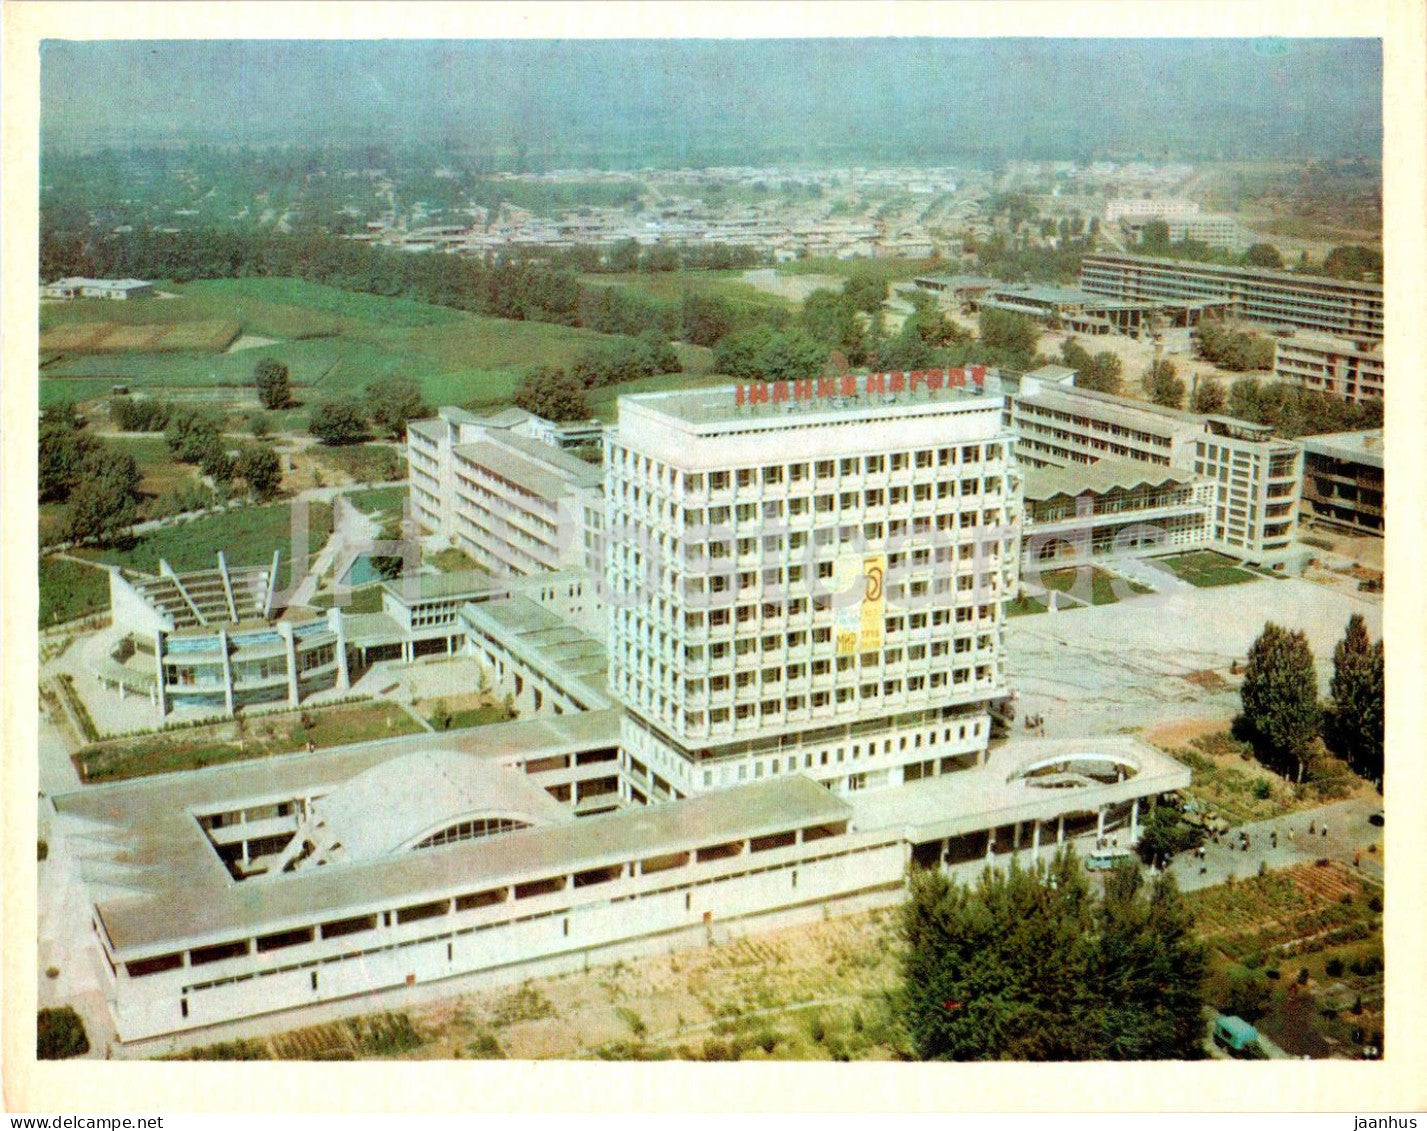 Tashkent - Lenin Tashkent University - Student's Town - 1974 - Uzbekistan USSR - unused - JH Postcards